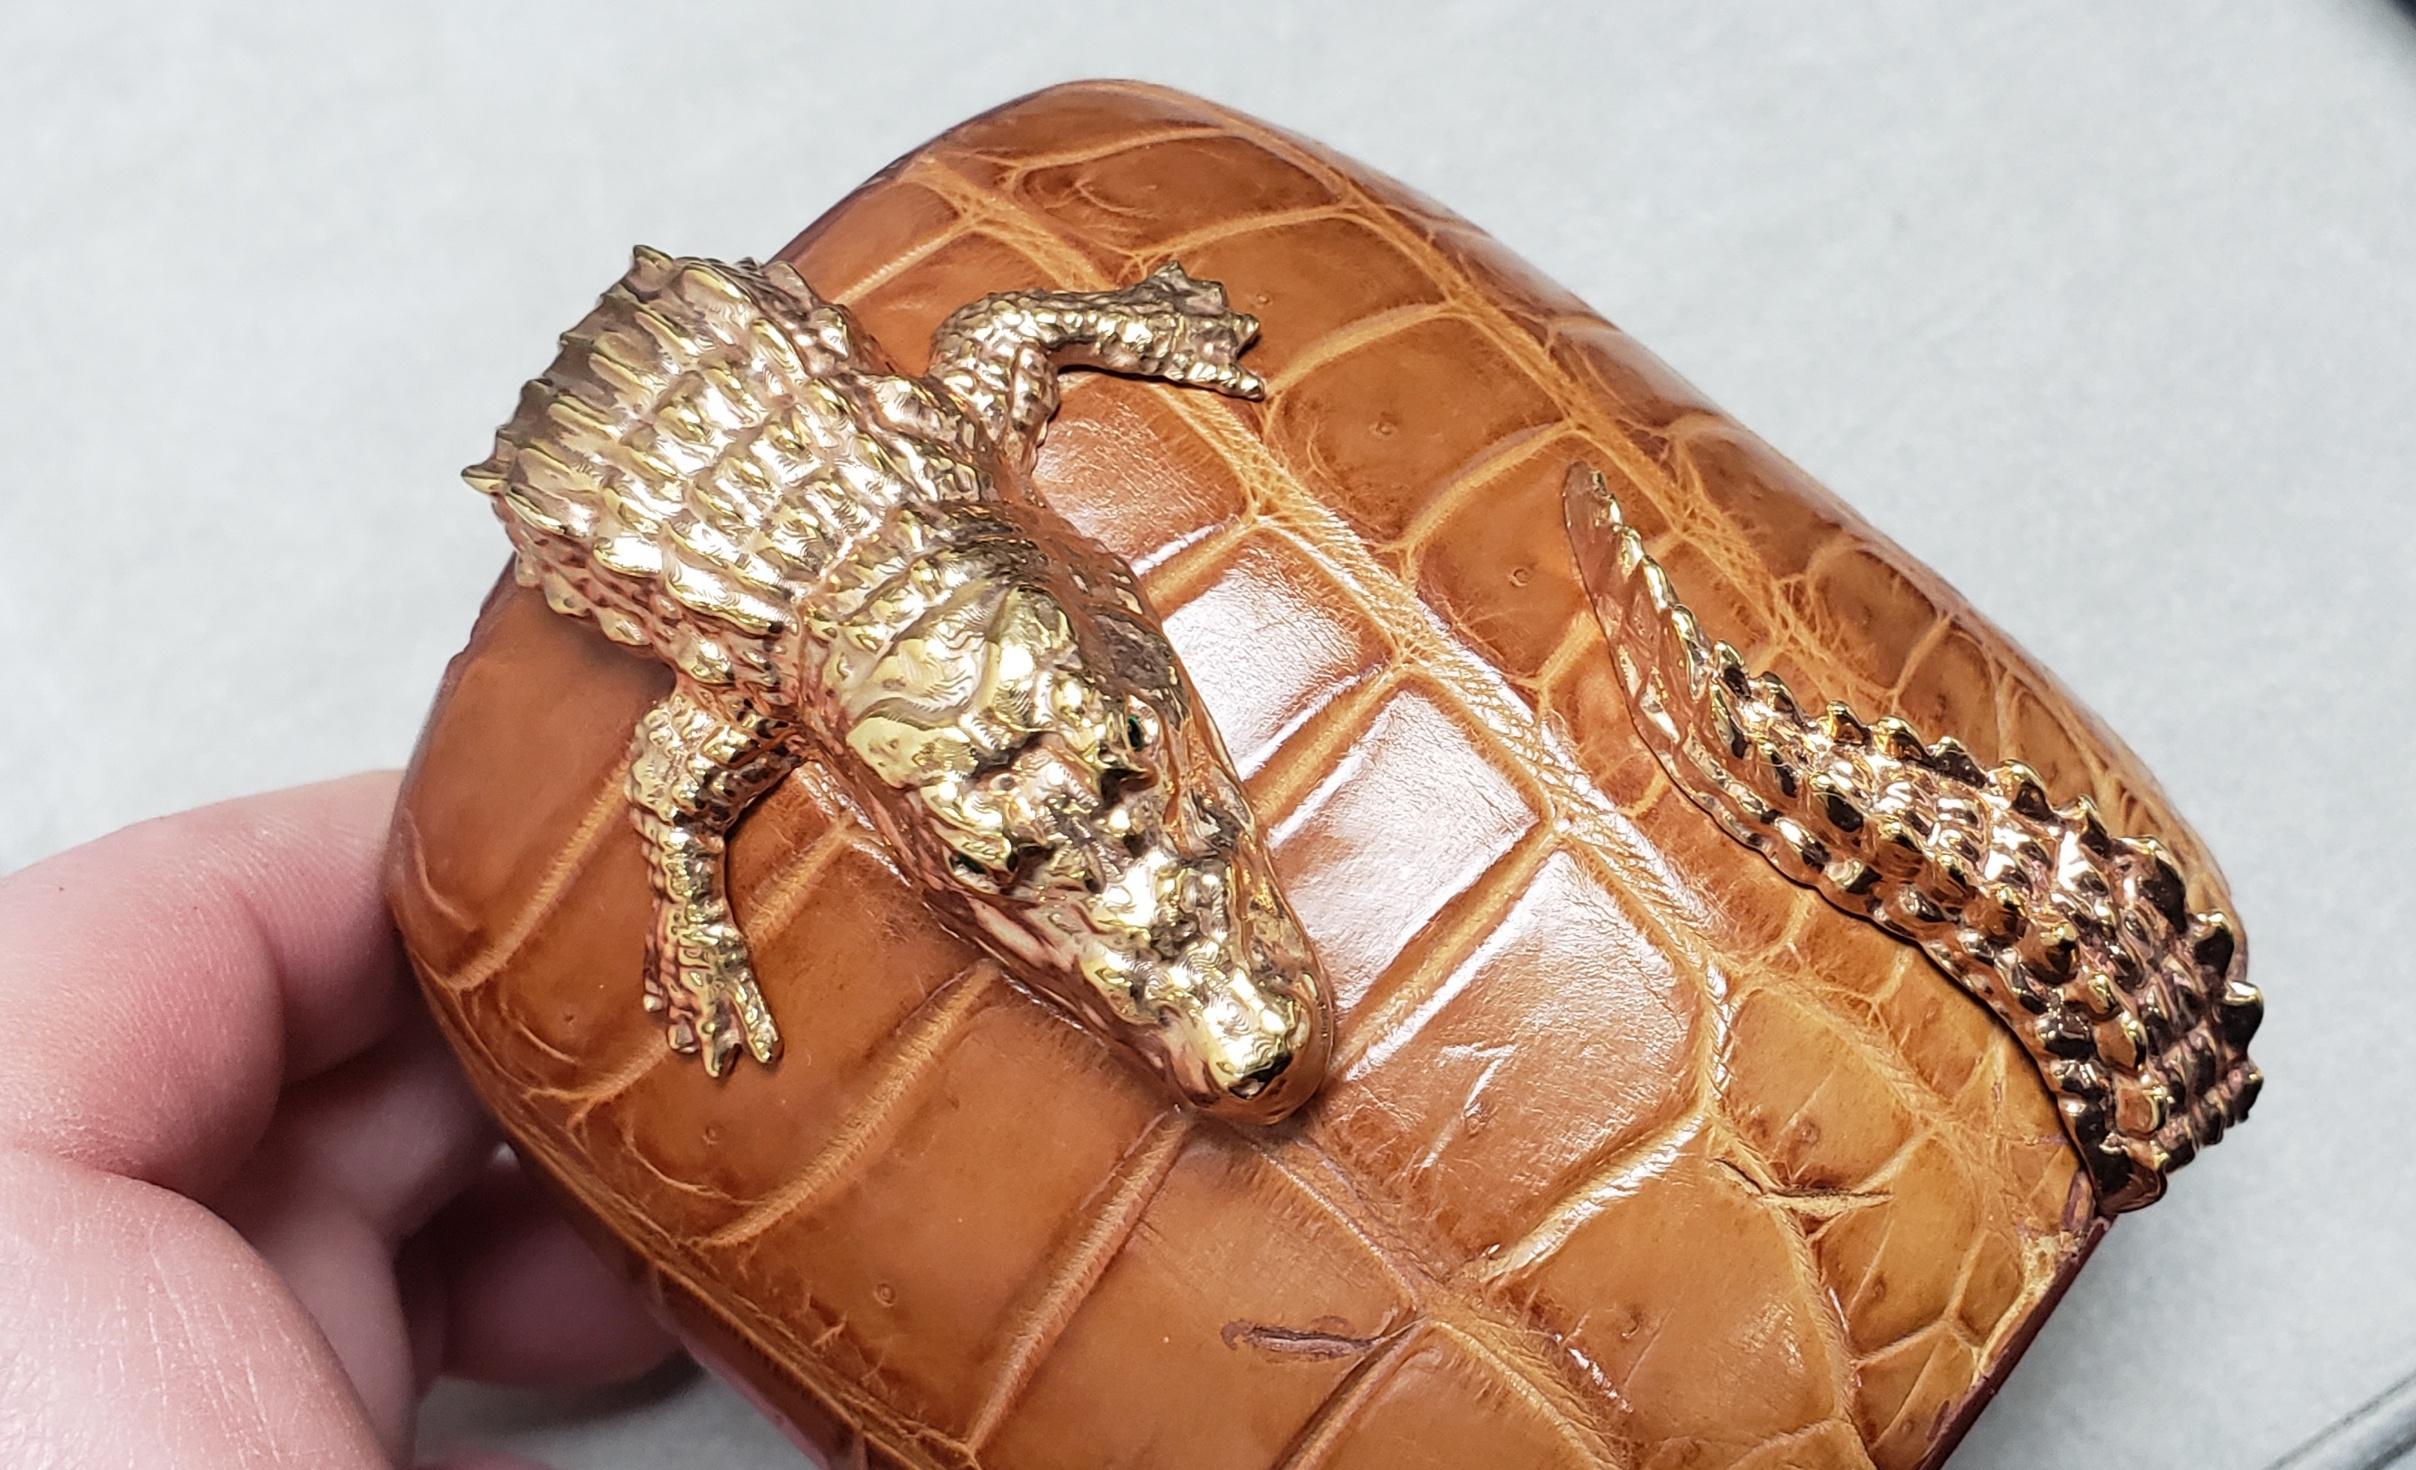 SABBADINI Italy 18K Rose Gold Alligator cuff bracelet 3.25